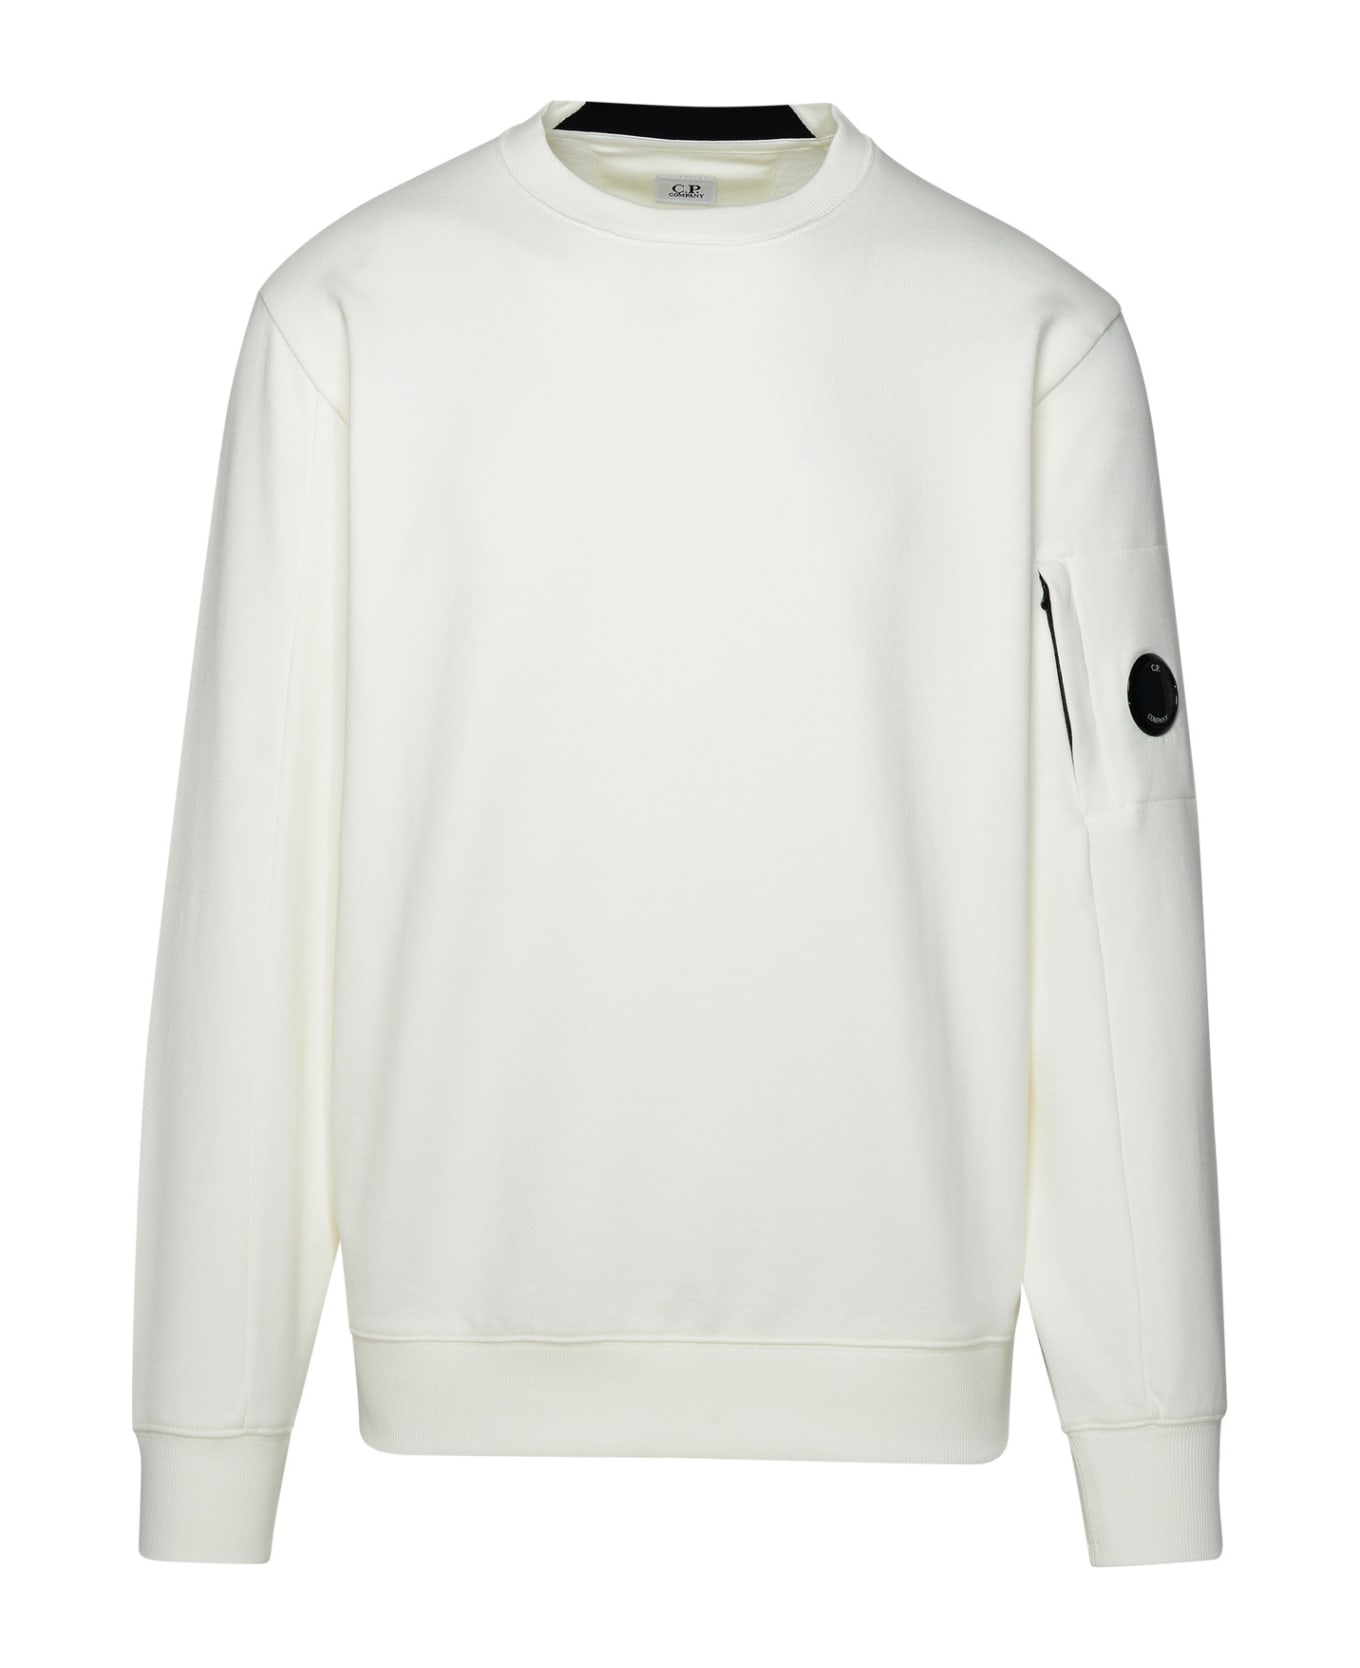 C.P. Company 'diagonal Raised Fleece' Ivory Cotton Sweatshirt - Avorio